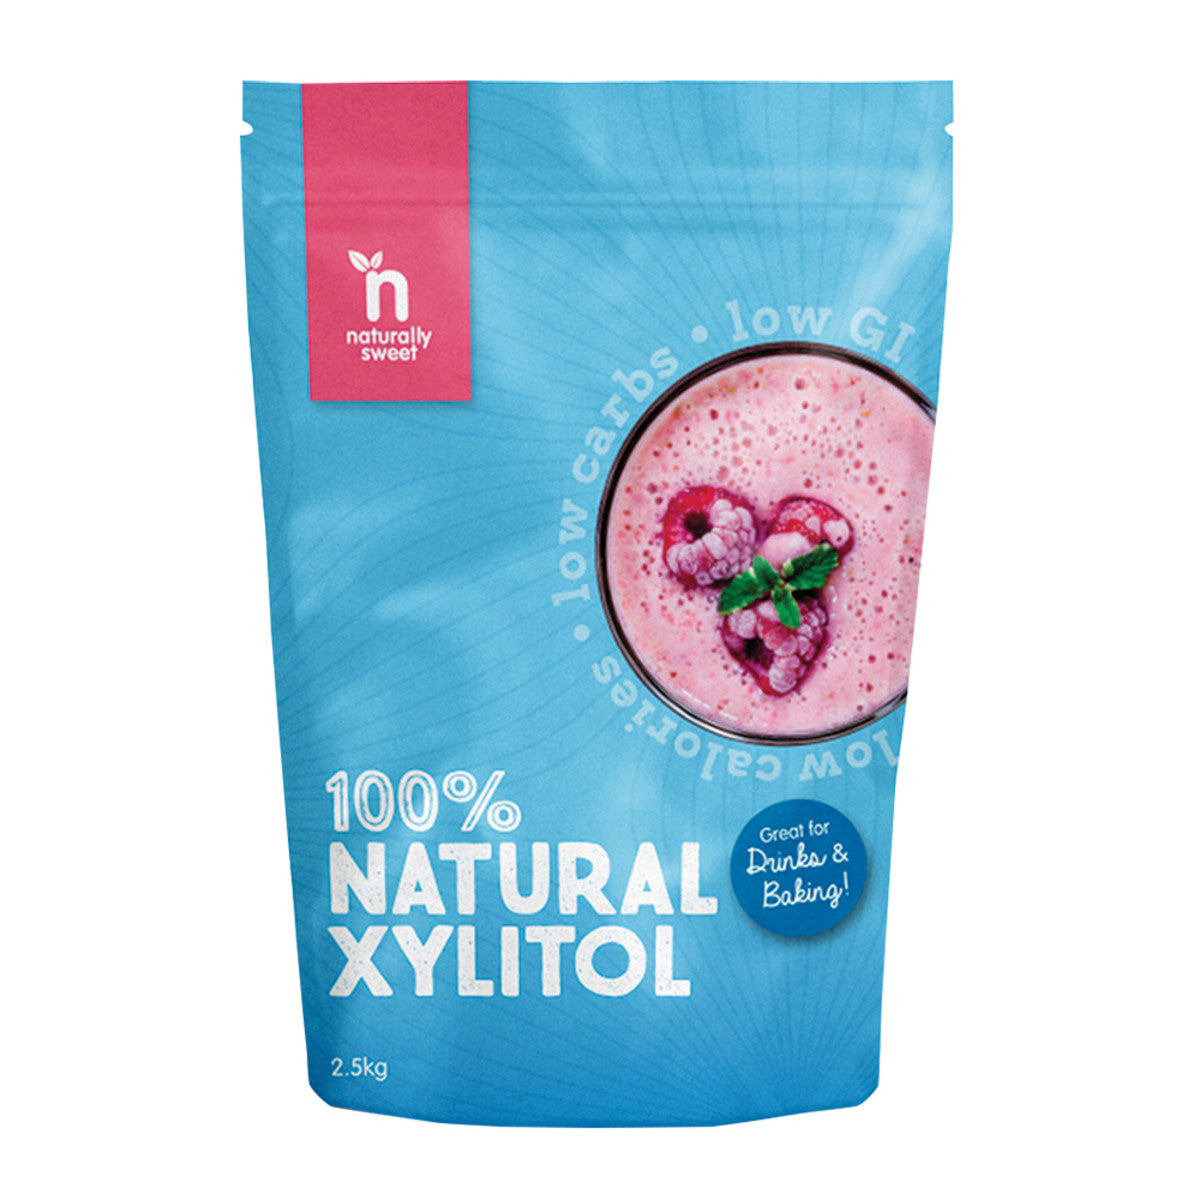 Naturally Sweet - 100% Natural Xylitol